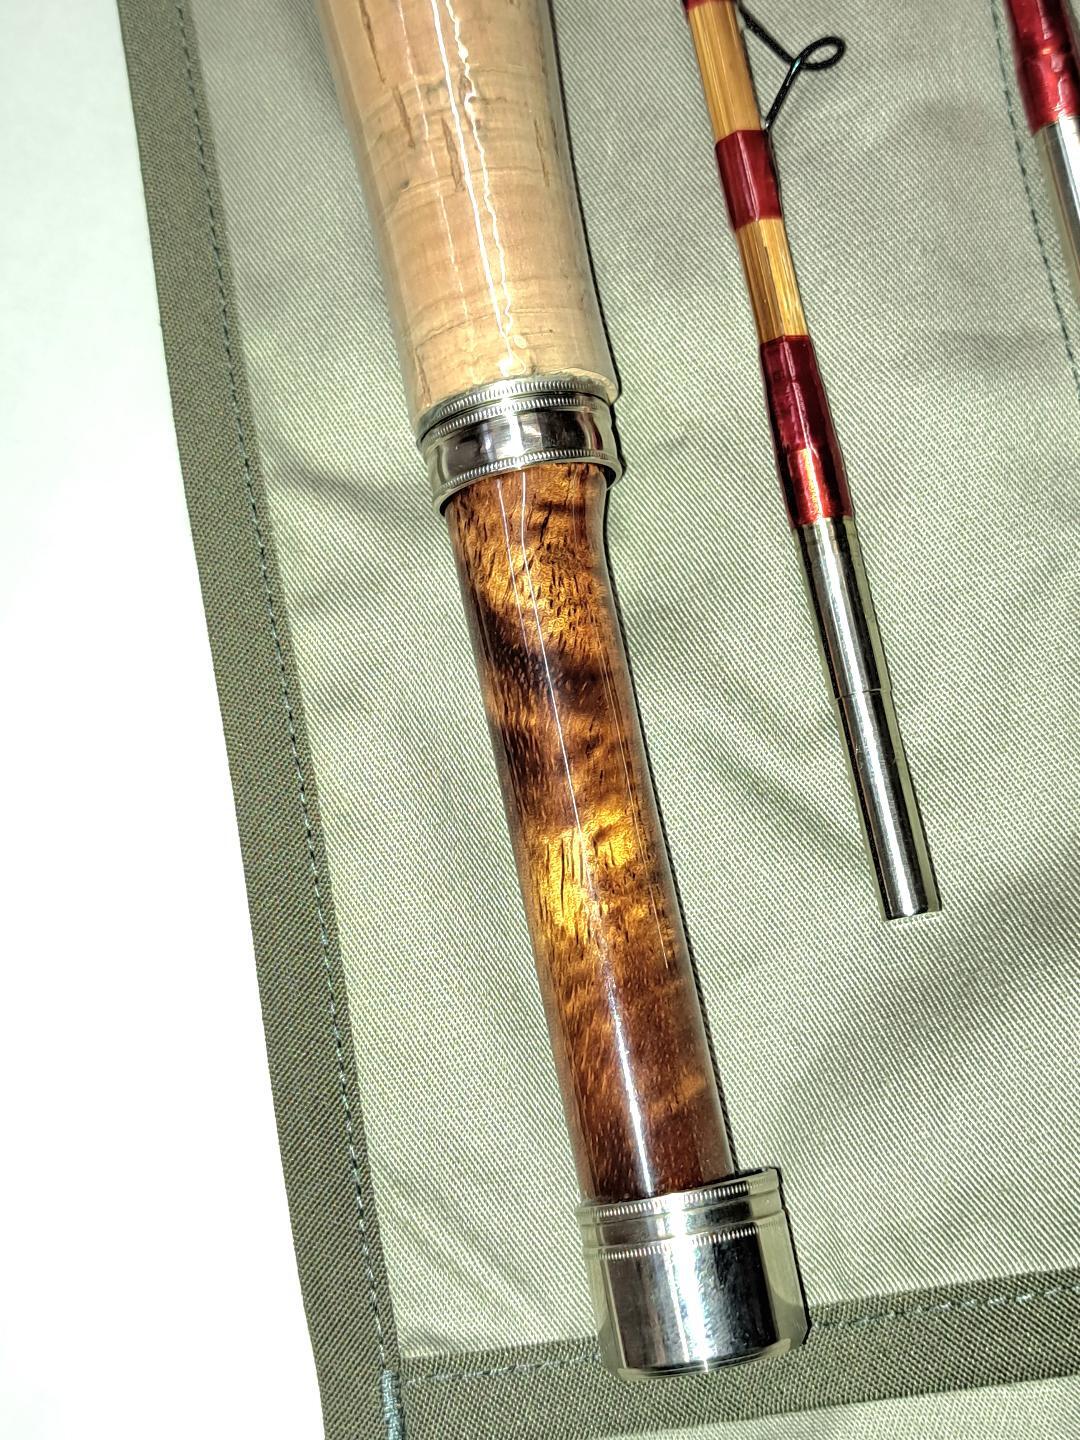 2251 - 7'0”, 2/2, 4 Weight Custom Made Bamboo Fly Rod